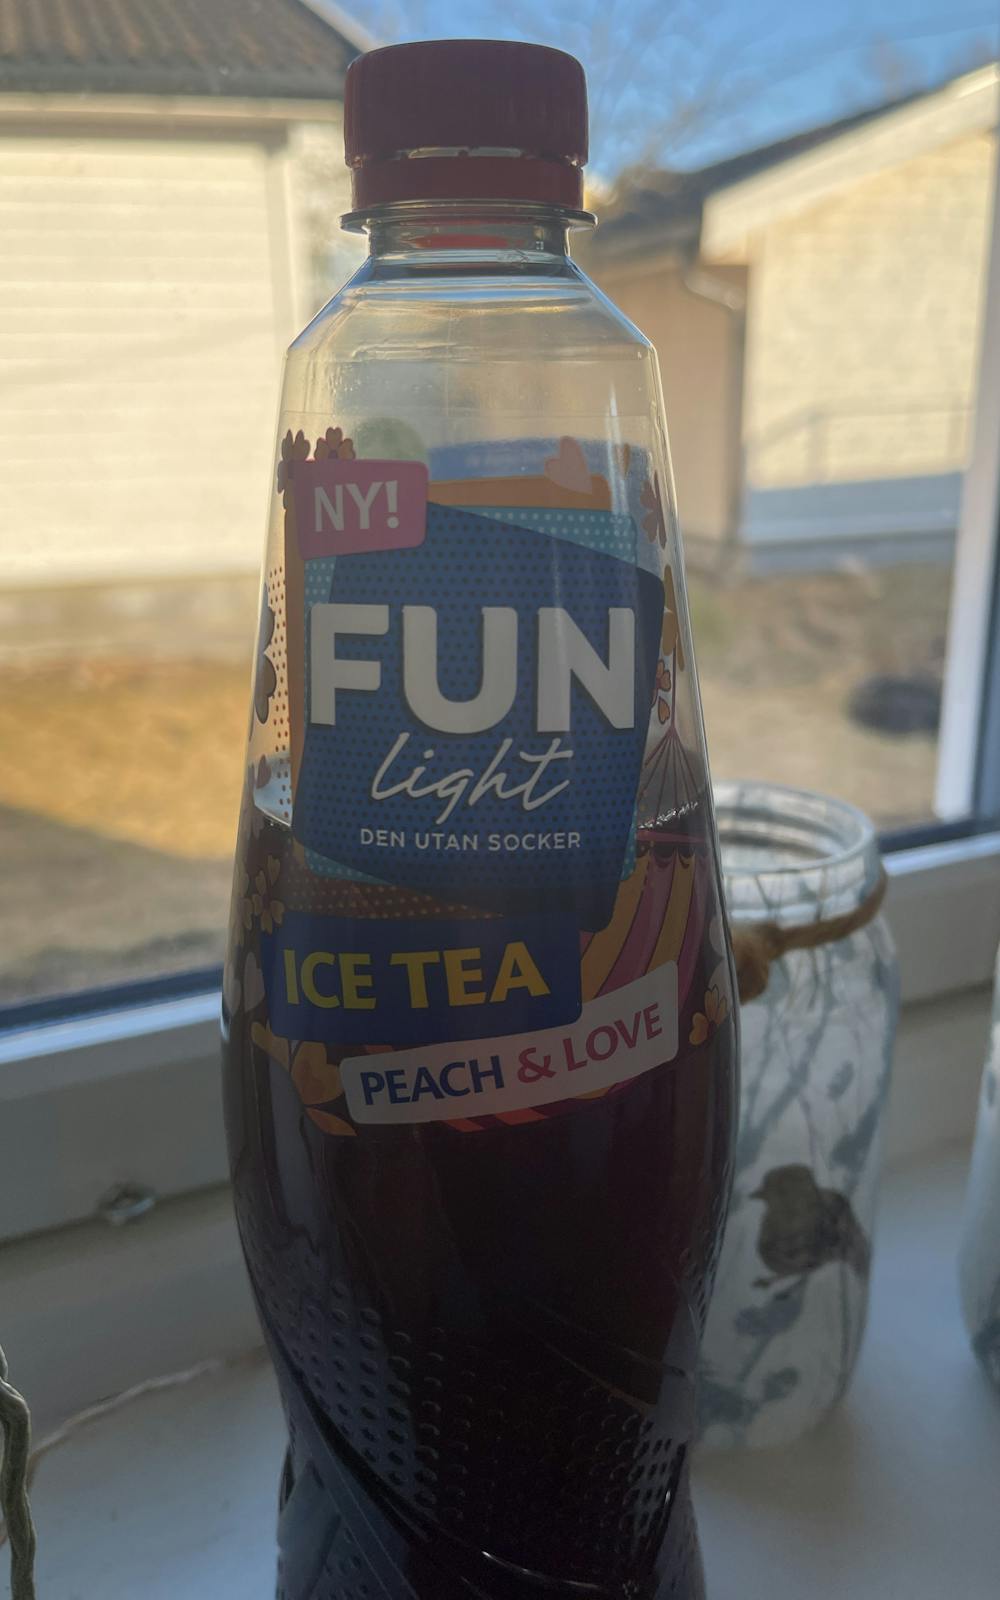 Ice tea, peach & love, Fun light